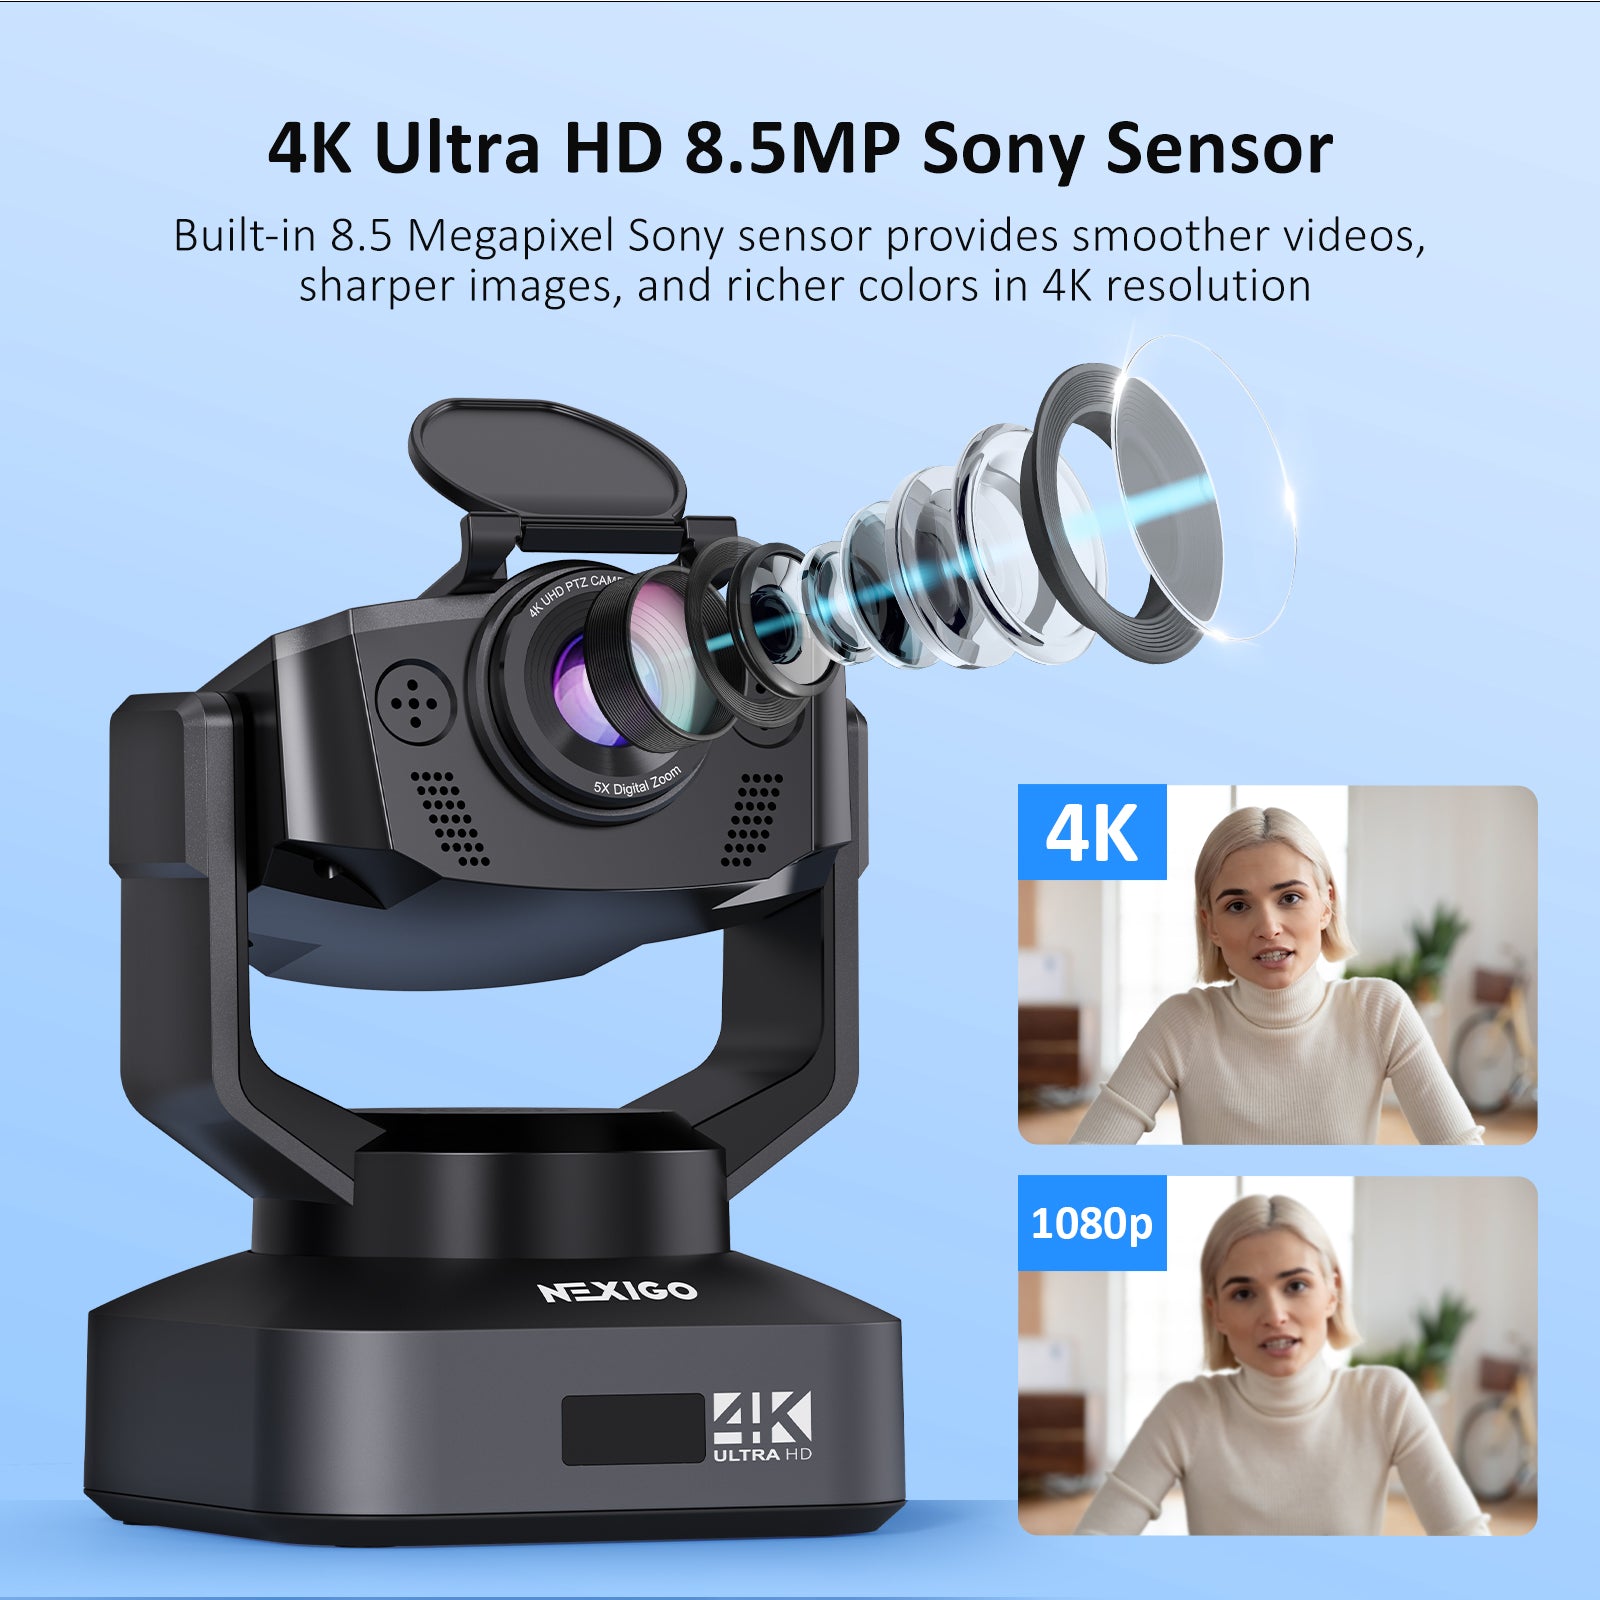 4K vs. 1080p: 4K (8.5MP) Sony sensor webcam offers smoother videos and sharper images